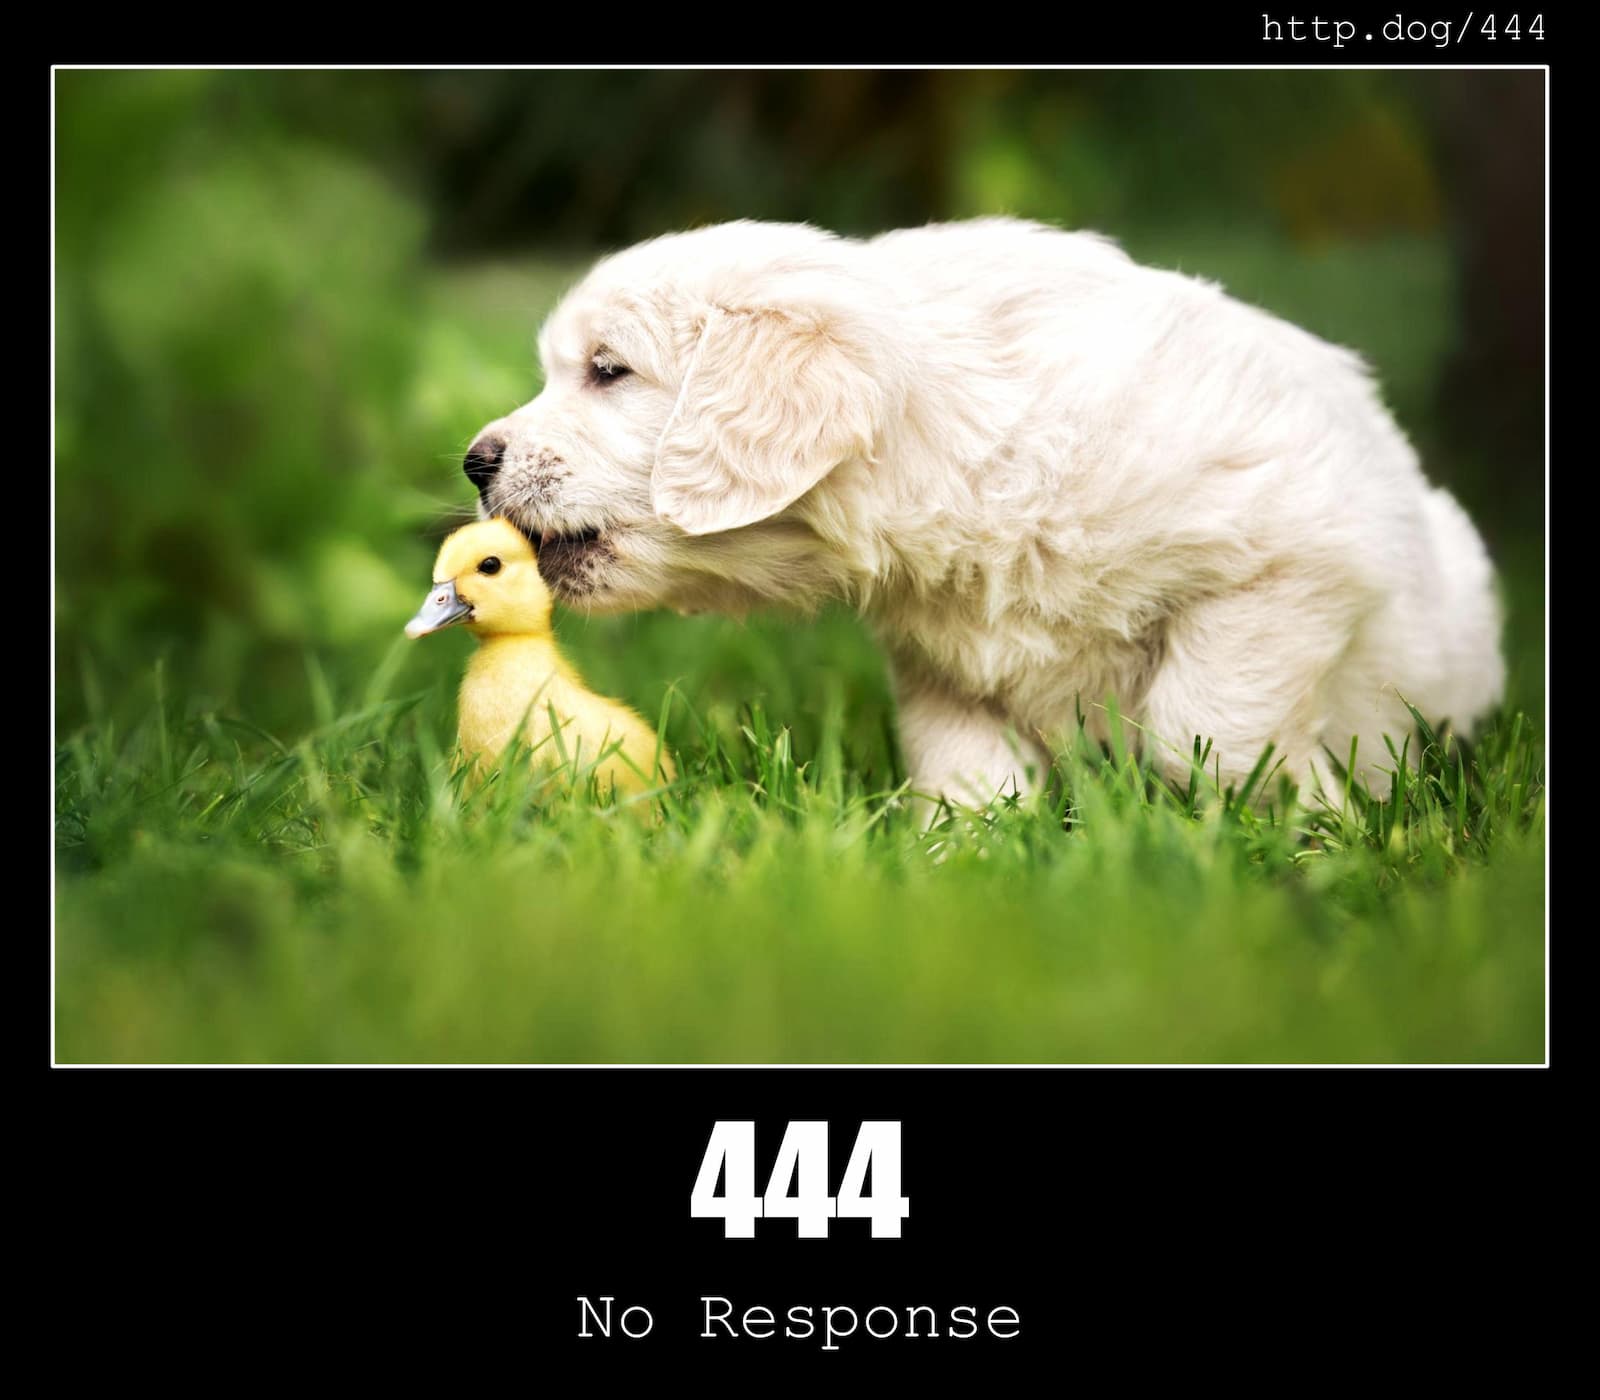 HTTP Status Code 444 No Response & Dogs